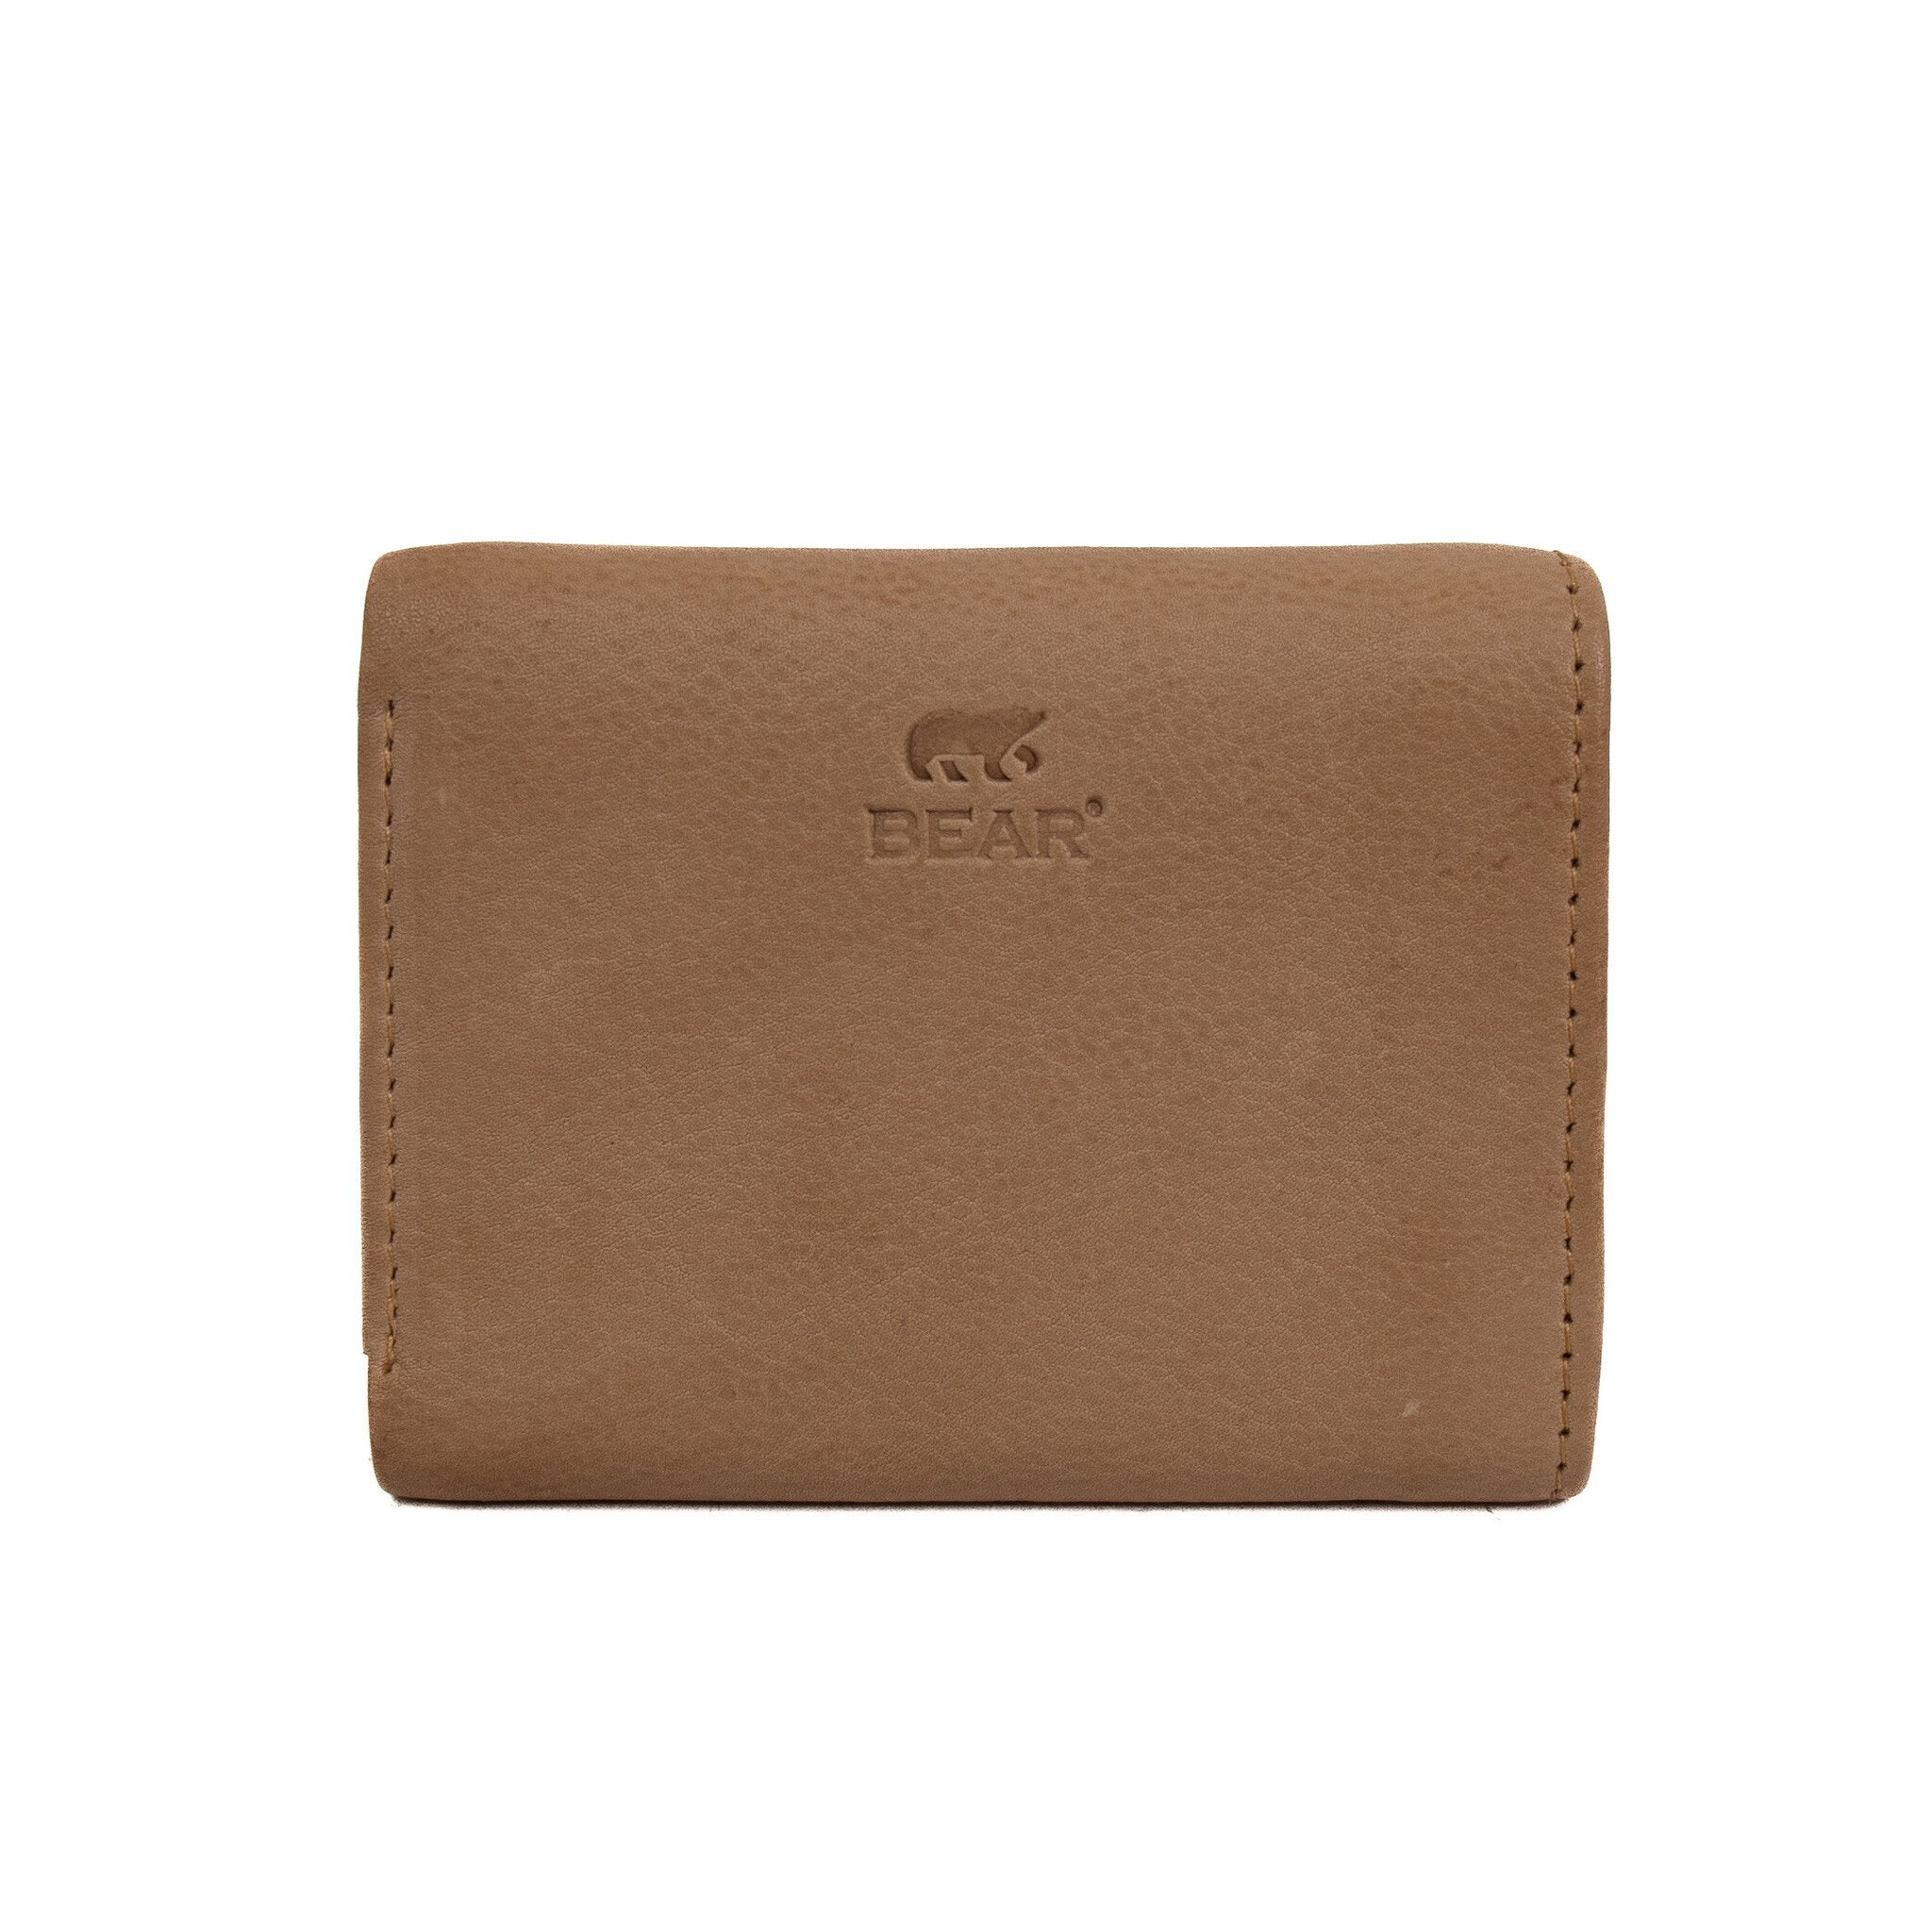 Wallet 'Nana' ivory - CP 4102